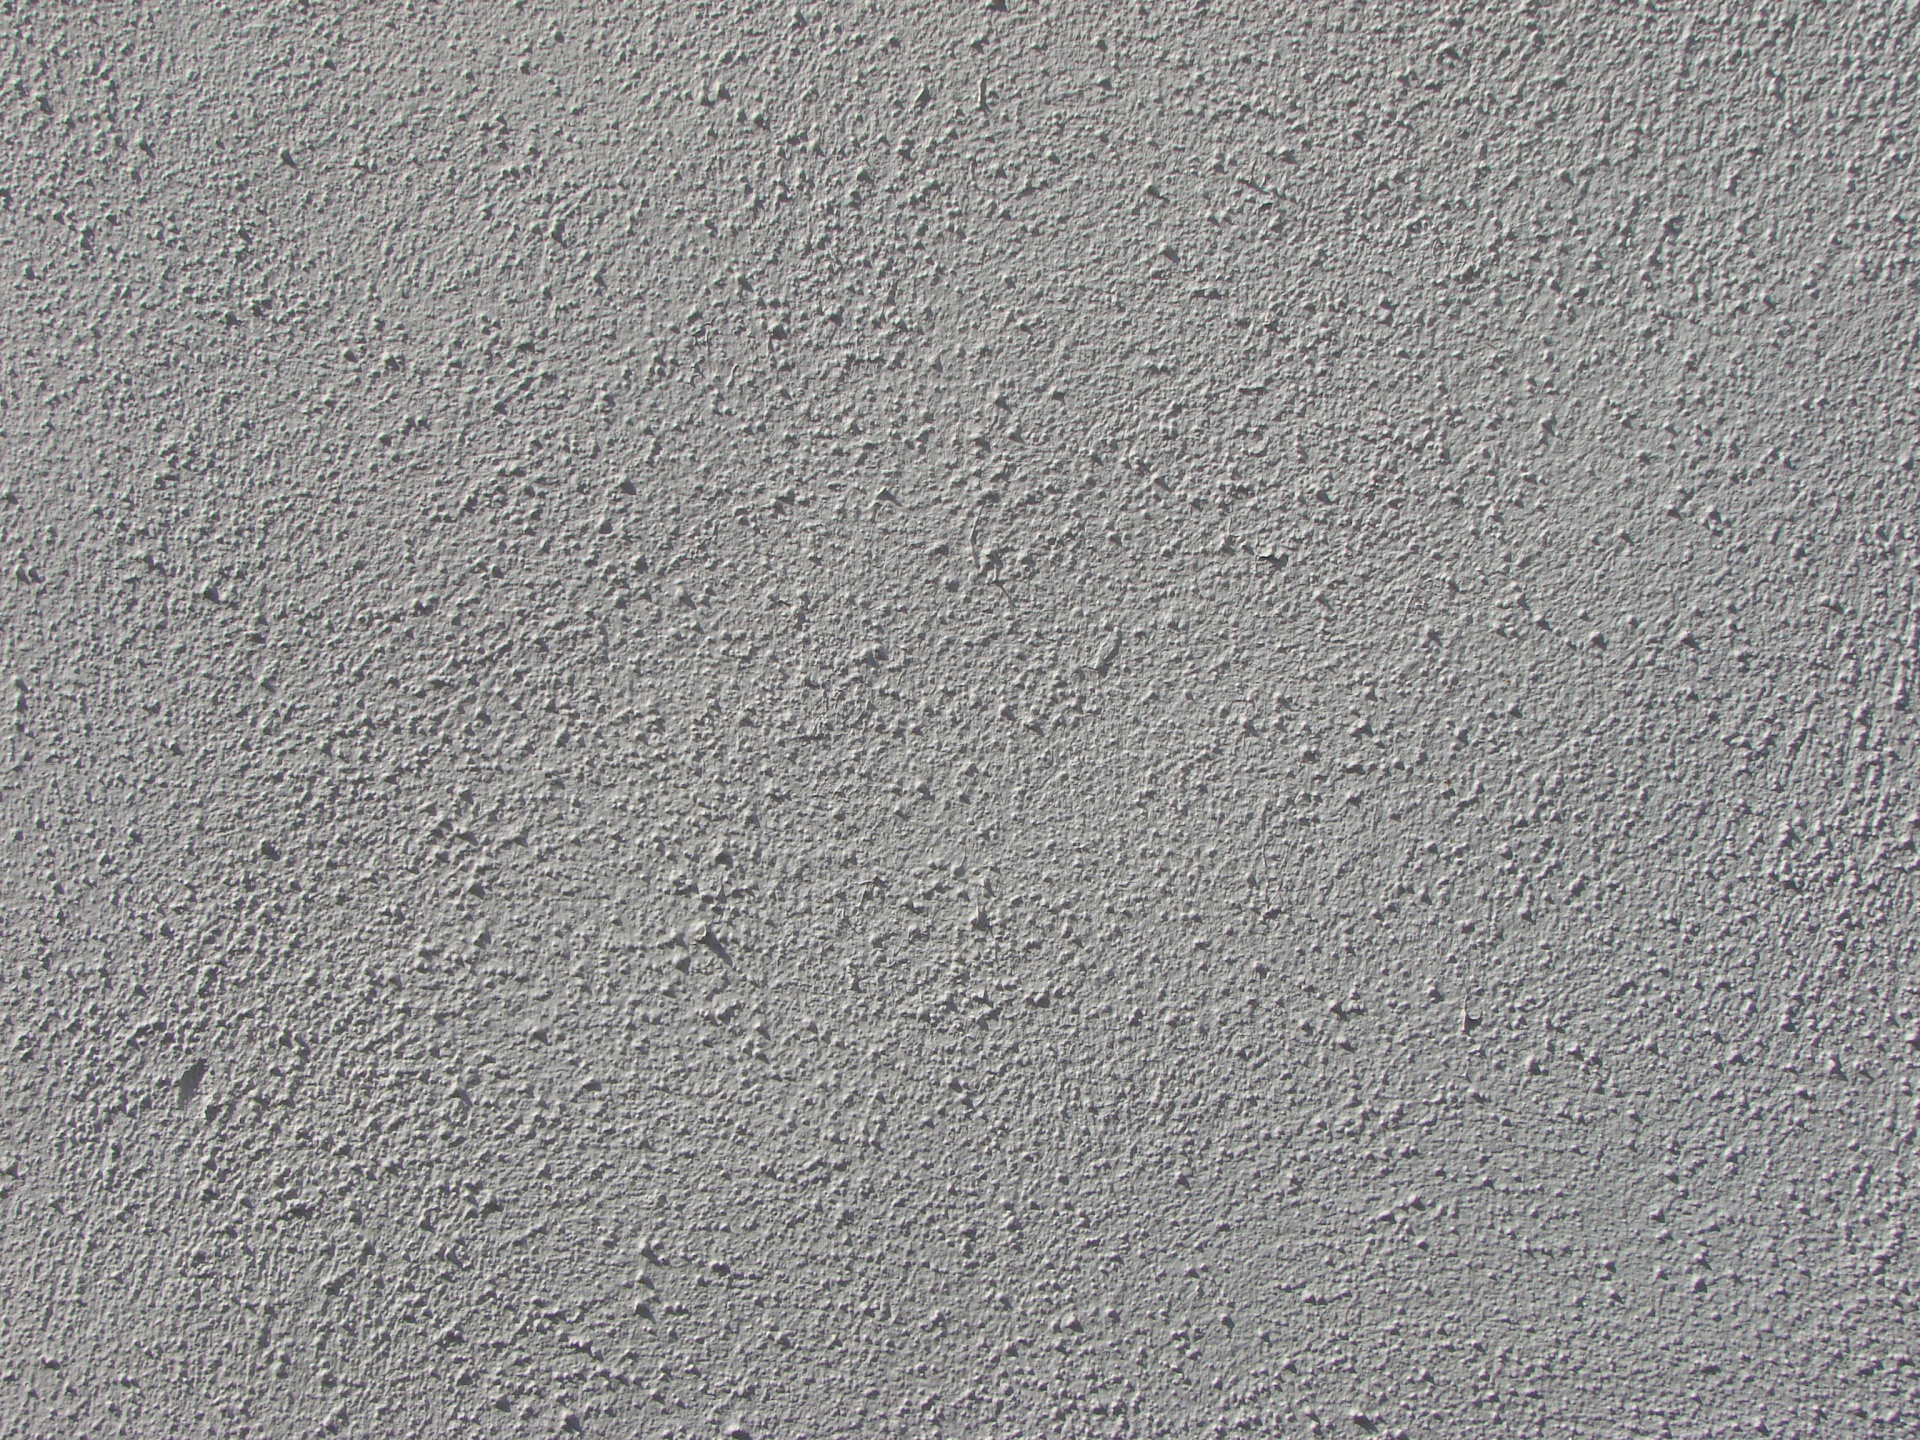 White Plaster Texture